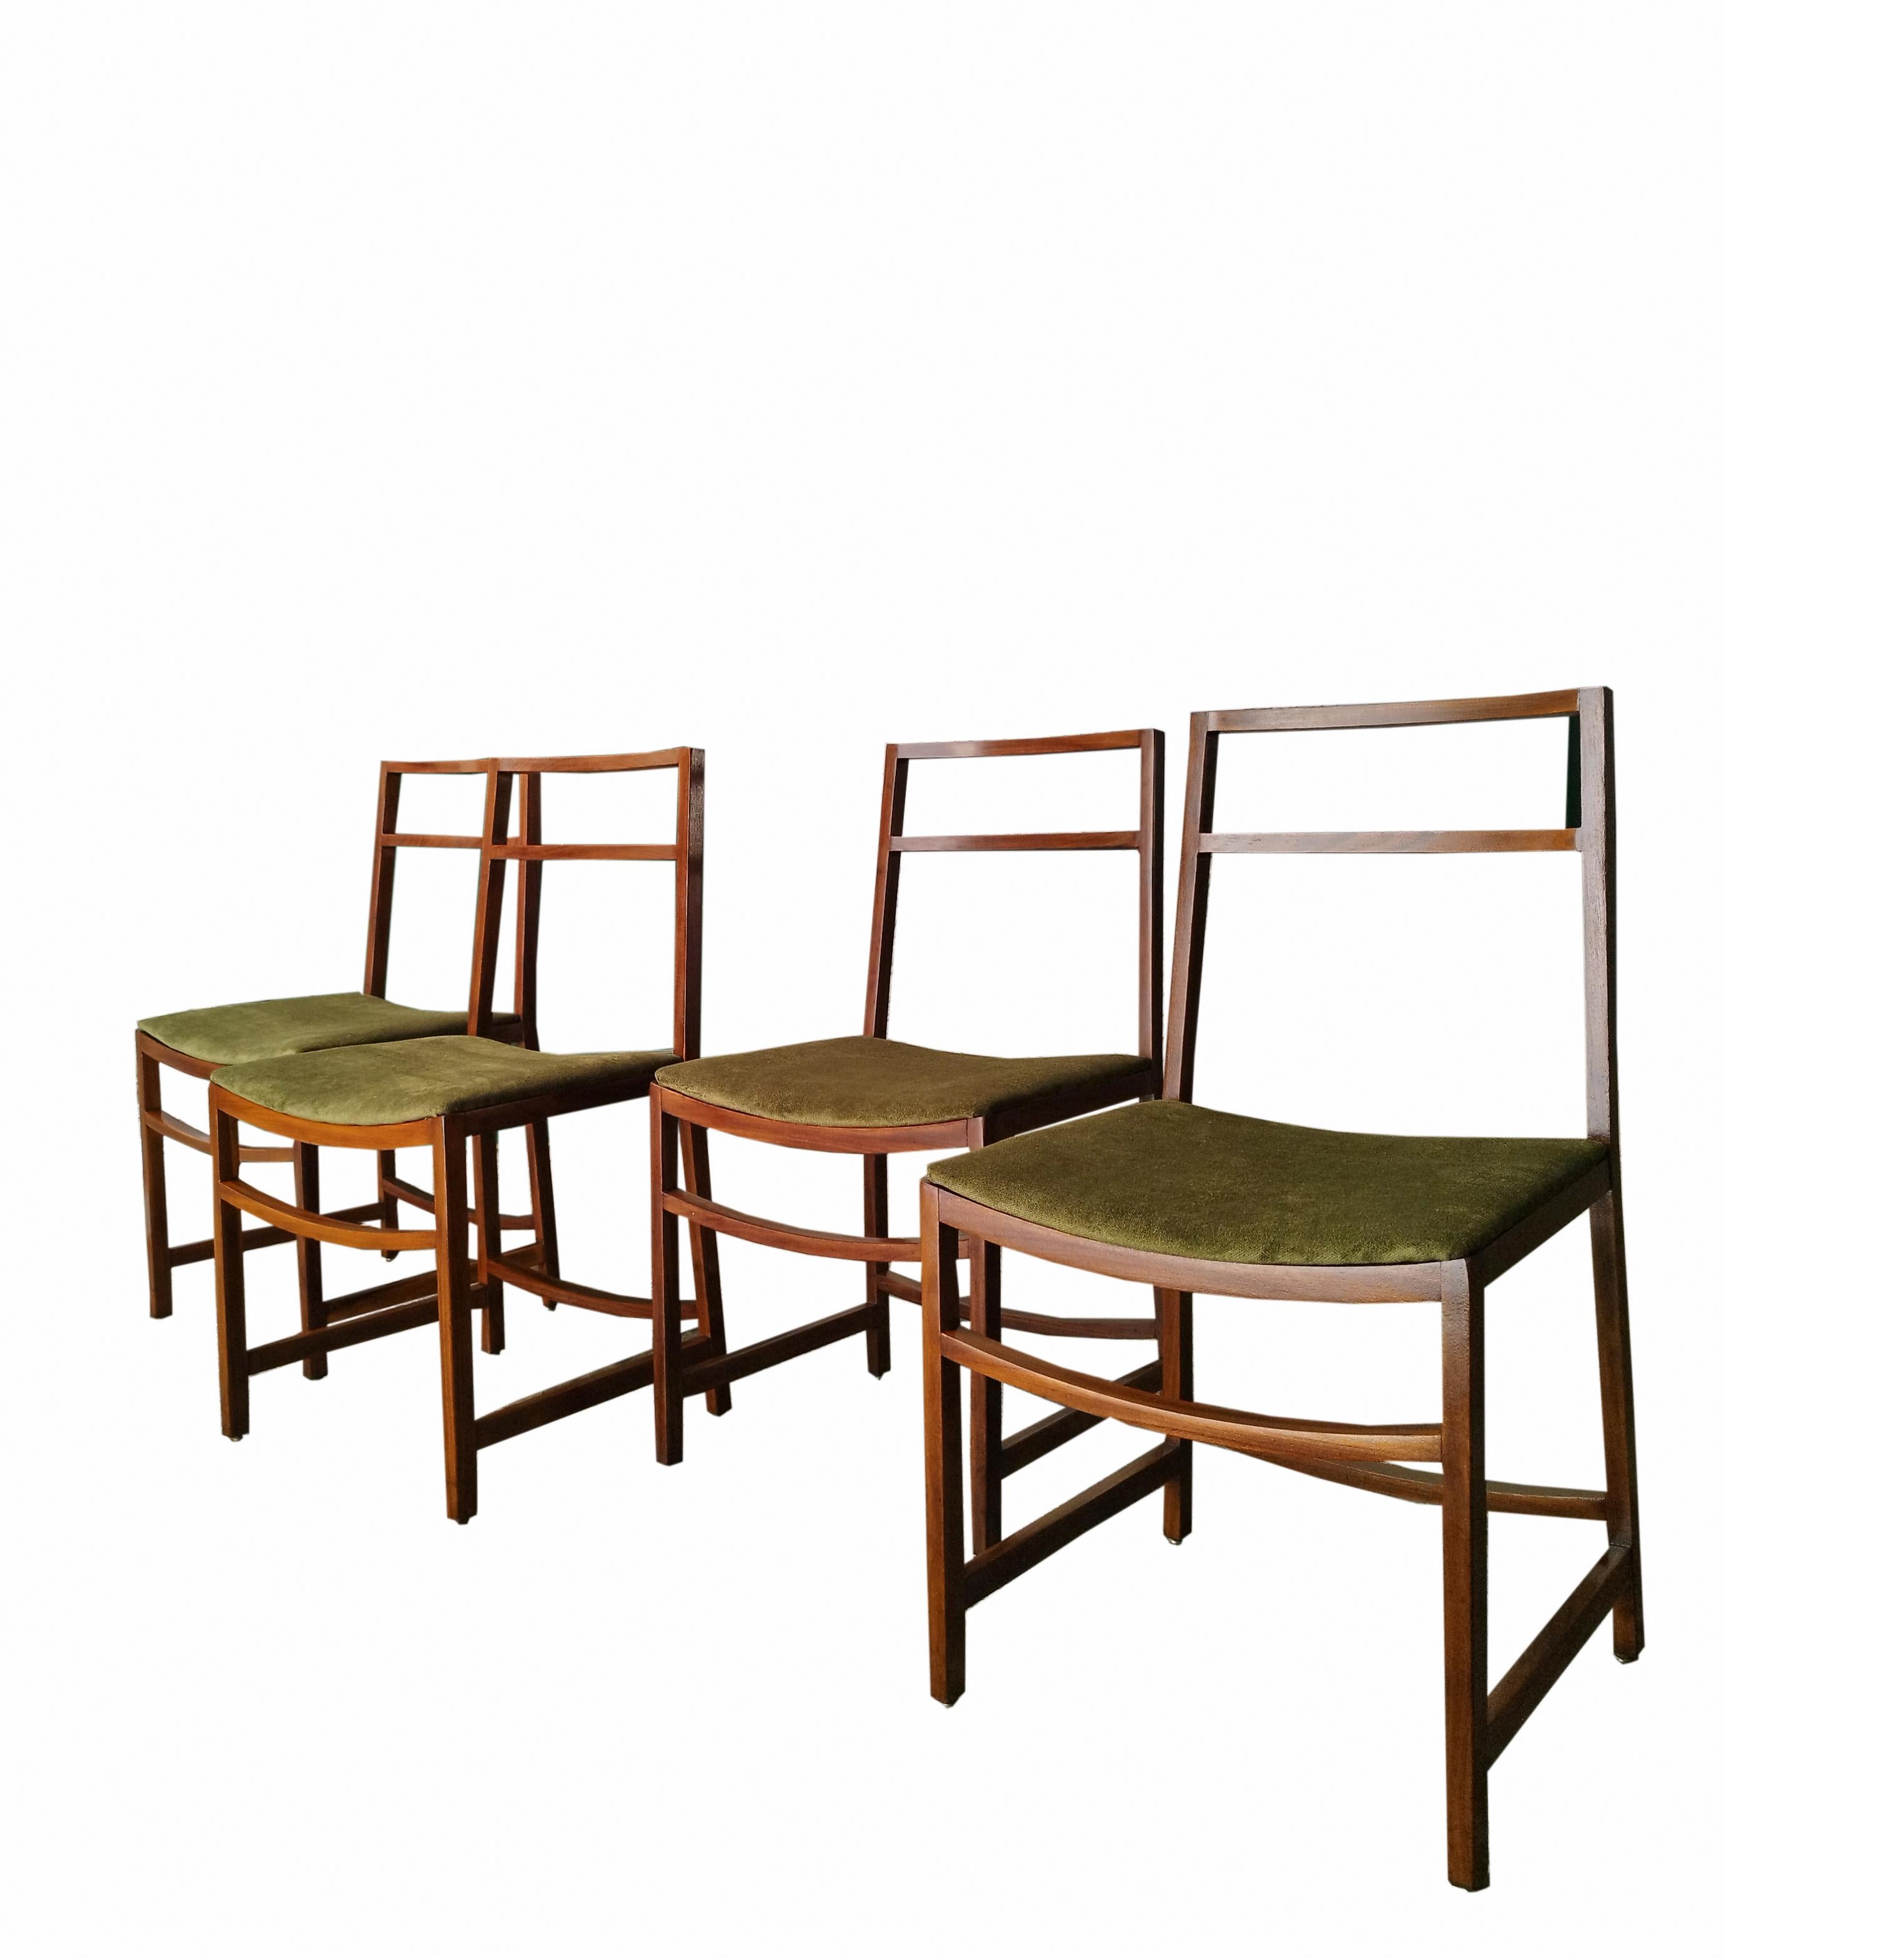 Italian Renato Venturi for Mim Set of 4 Green Fabric and Wood Chairs, Italy 1960s